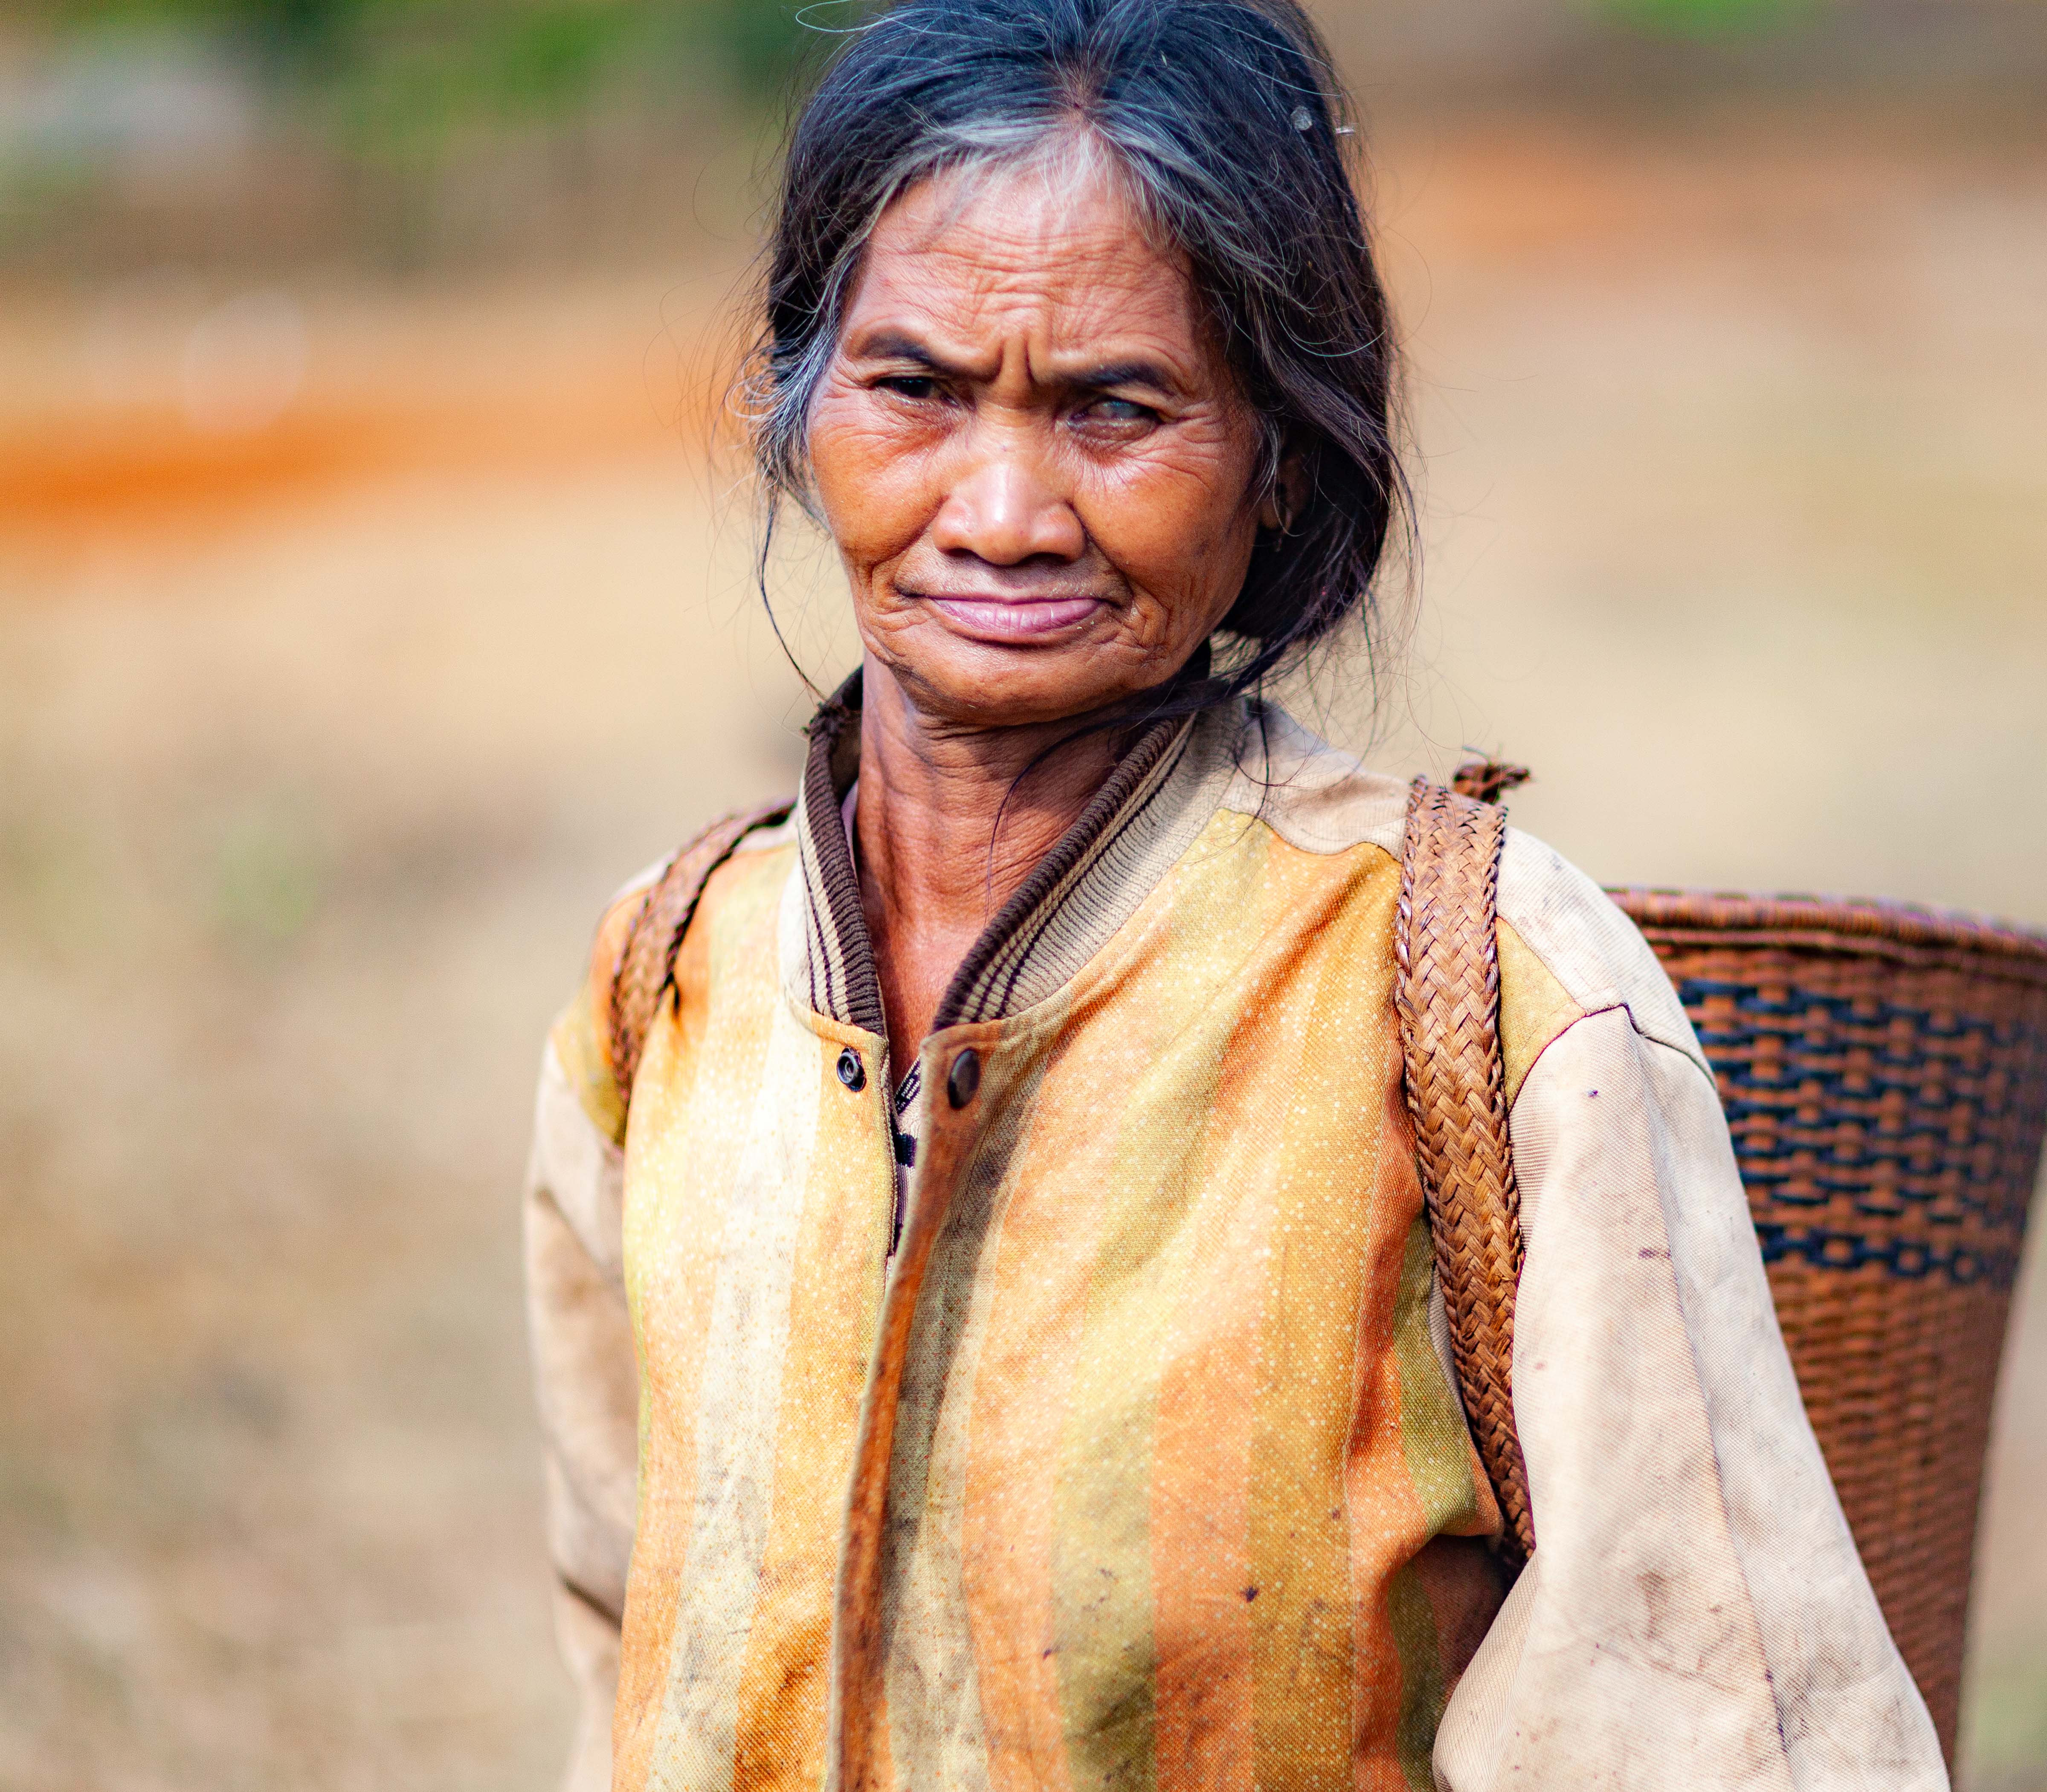 Cambodia, Mondol Kiri Prov, Woman With Basket, 2011, IMG 0779